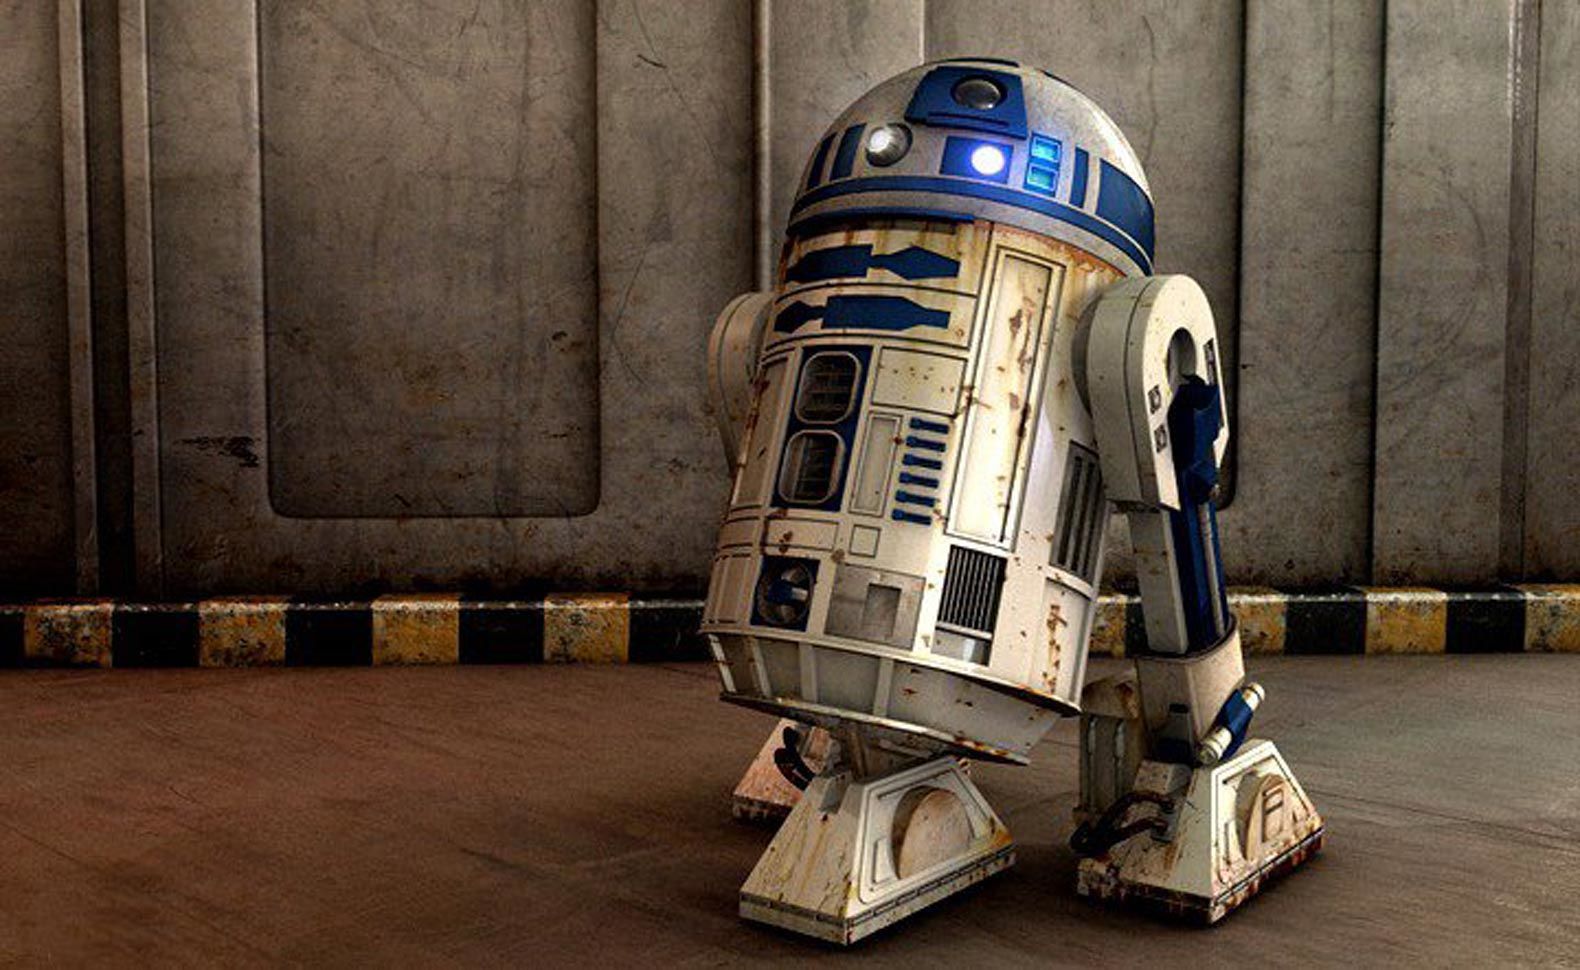 Star Wars theory R2-D2 planned Obi-Wan's death